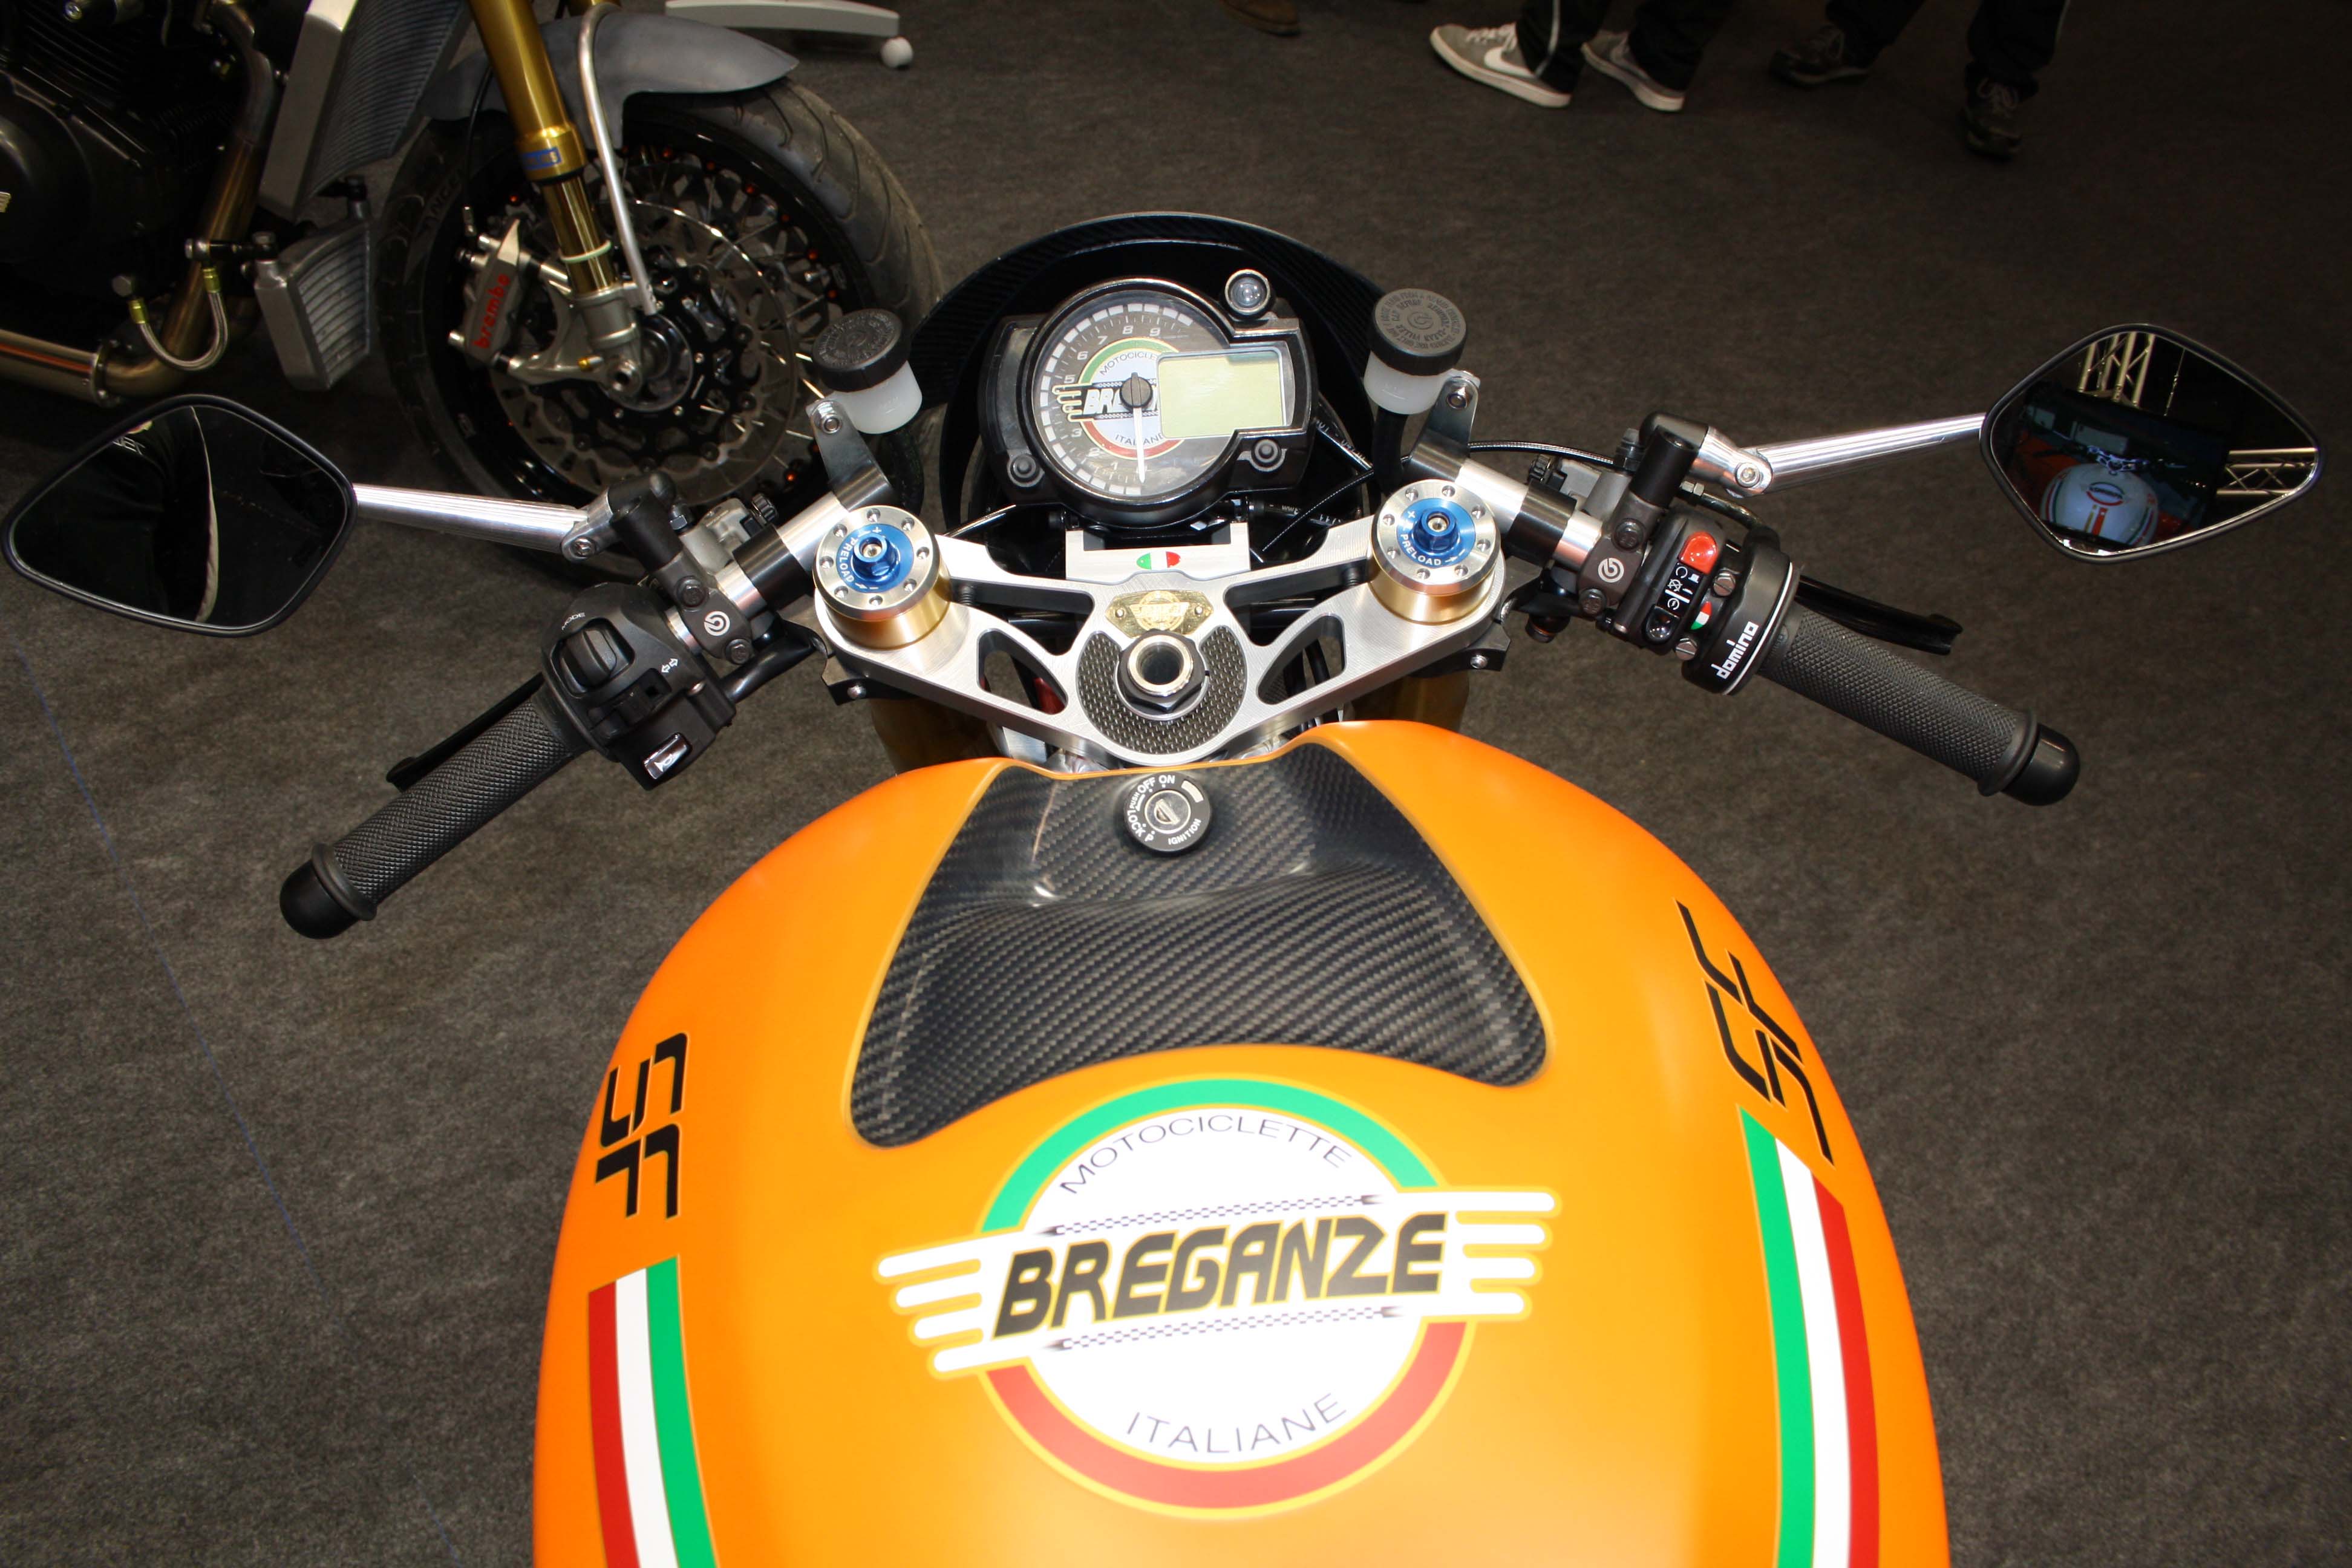 Orange Factory Breganze al Motor Bike Expo 2012